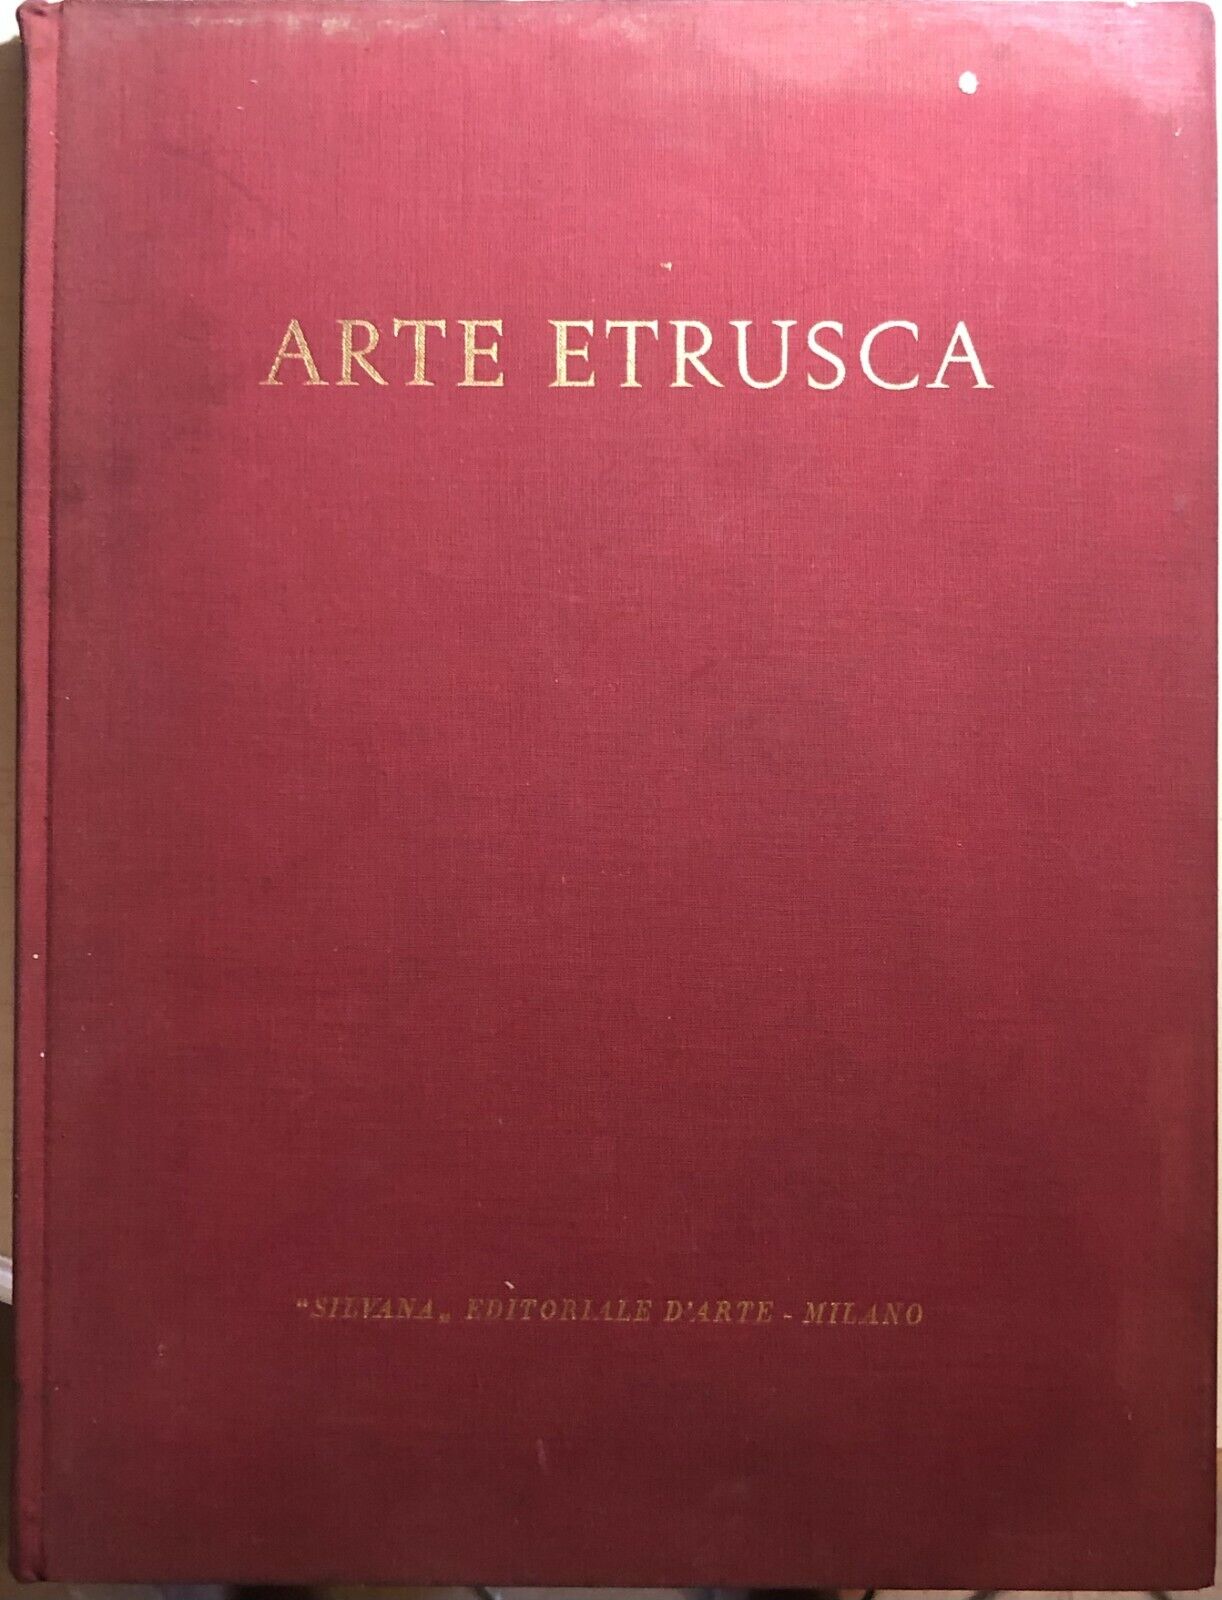 Arte etrusca di Raymond Bloch,  1958,  Silvana Editoriale d'Arte Milano